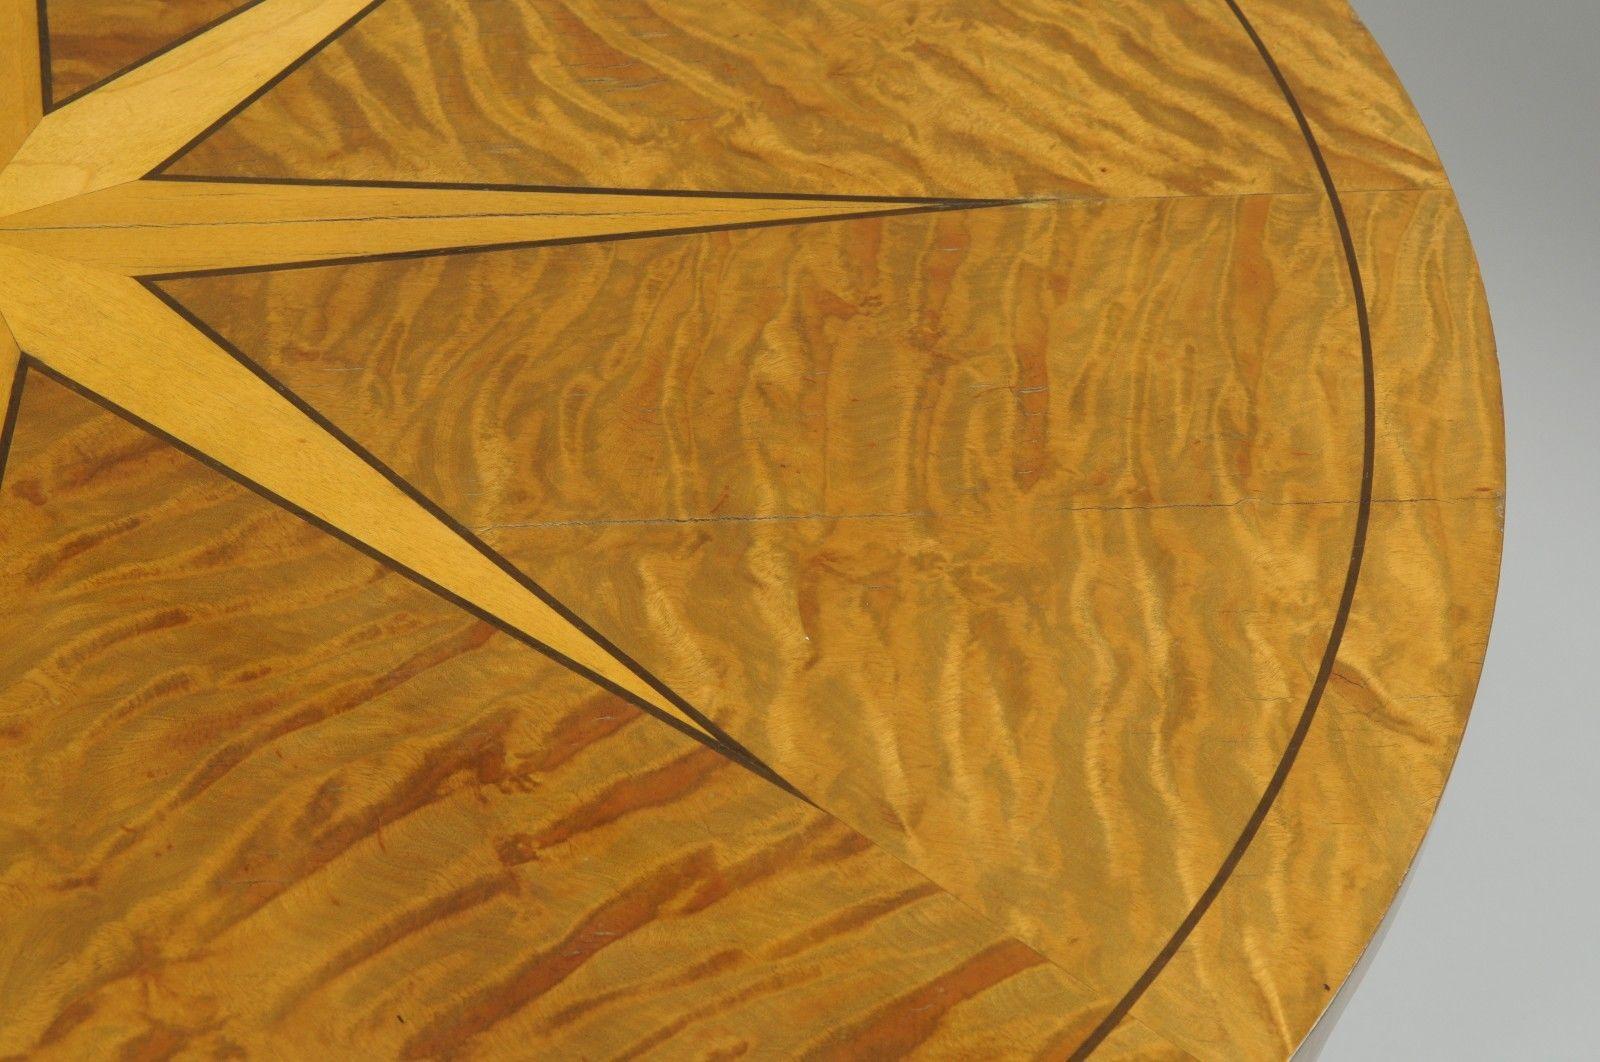 20th Century Biedermeier Style Round Center Table Star Inlaid Marquetry Burl Wood Veneer